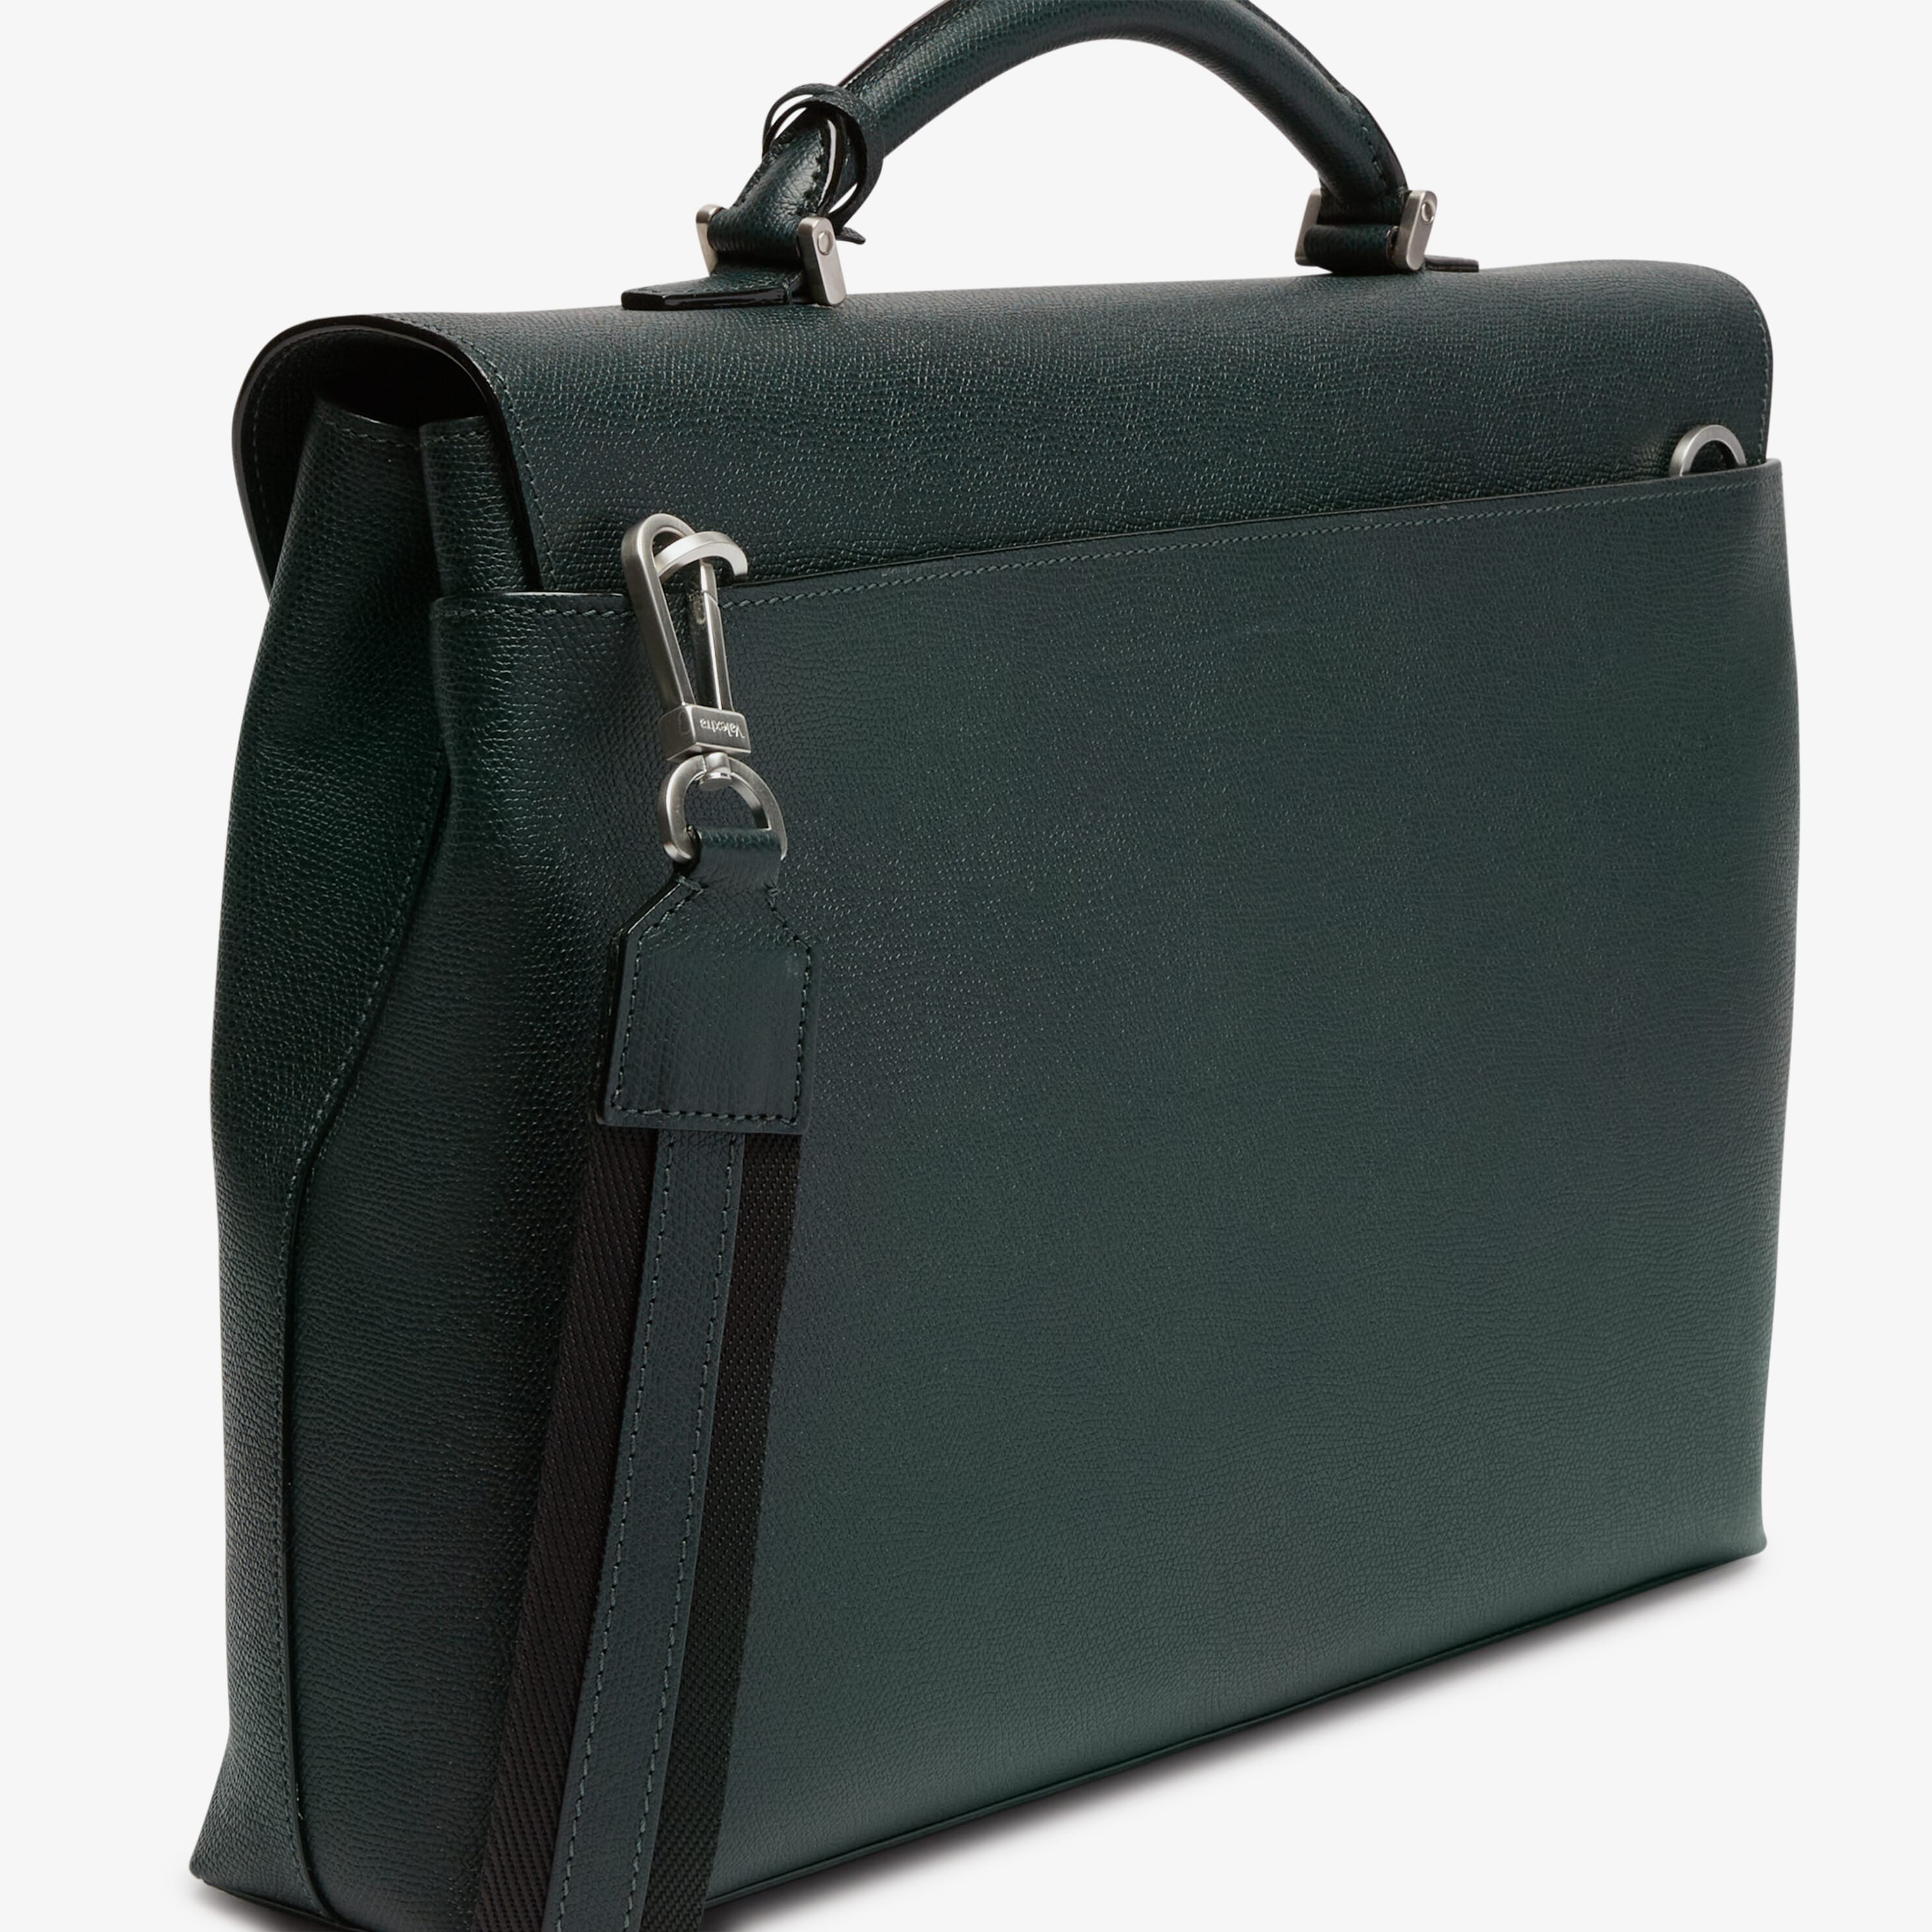 Avietta Briefcase with Flap 24h - Valextra Green - Vitello VS - Valextra - 5